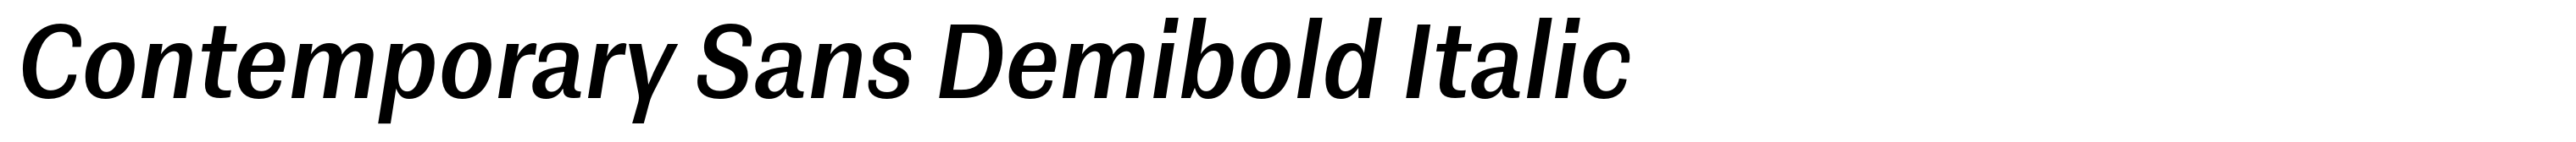 Contemporary Sans Demibold Italic